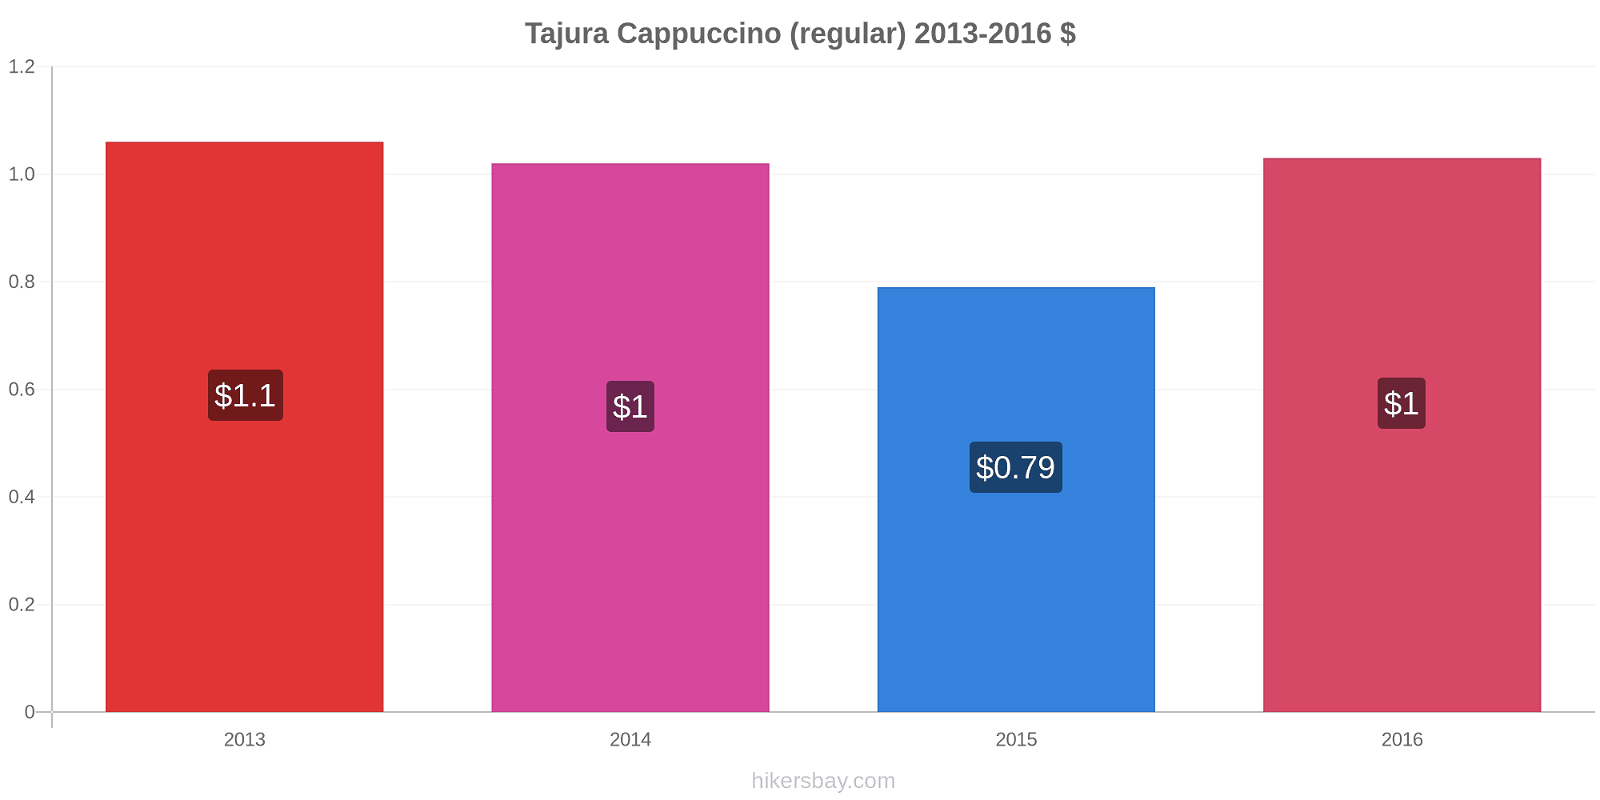 Tajura price changes Cappuccino (regular) hikersbay.com